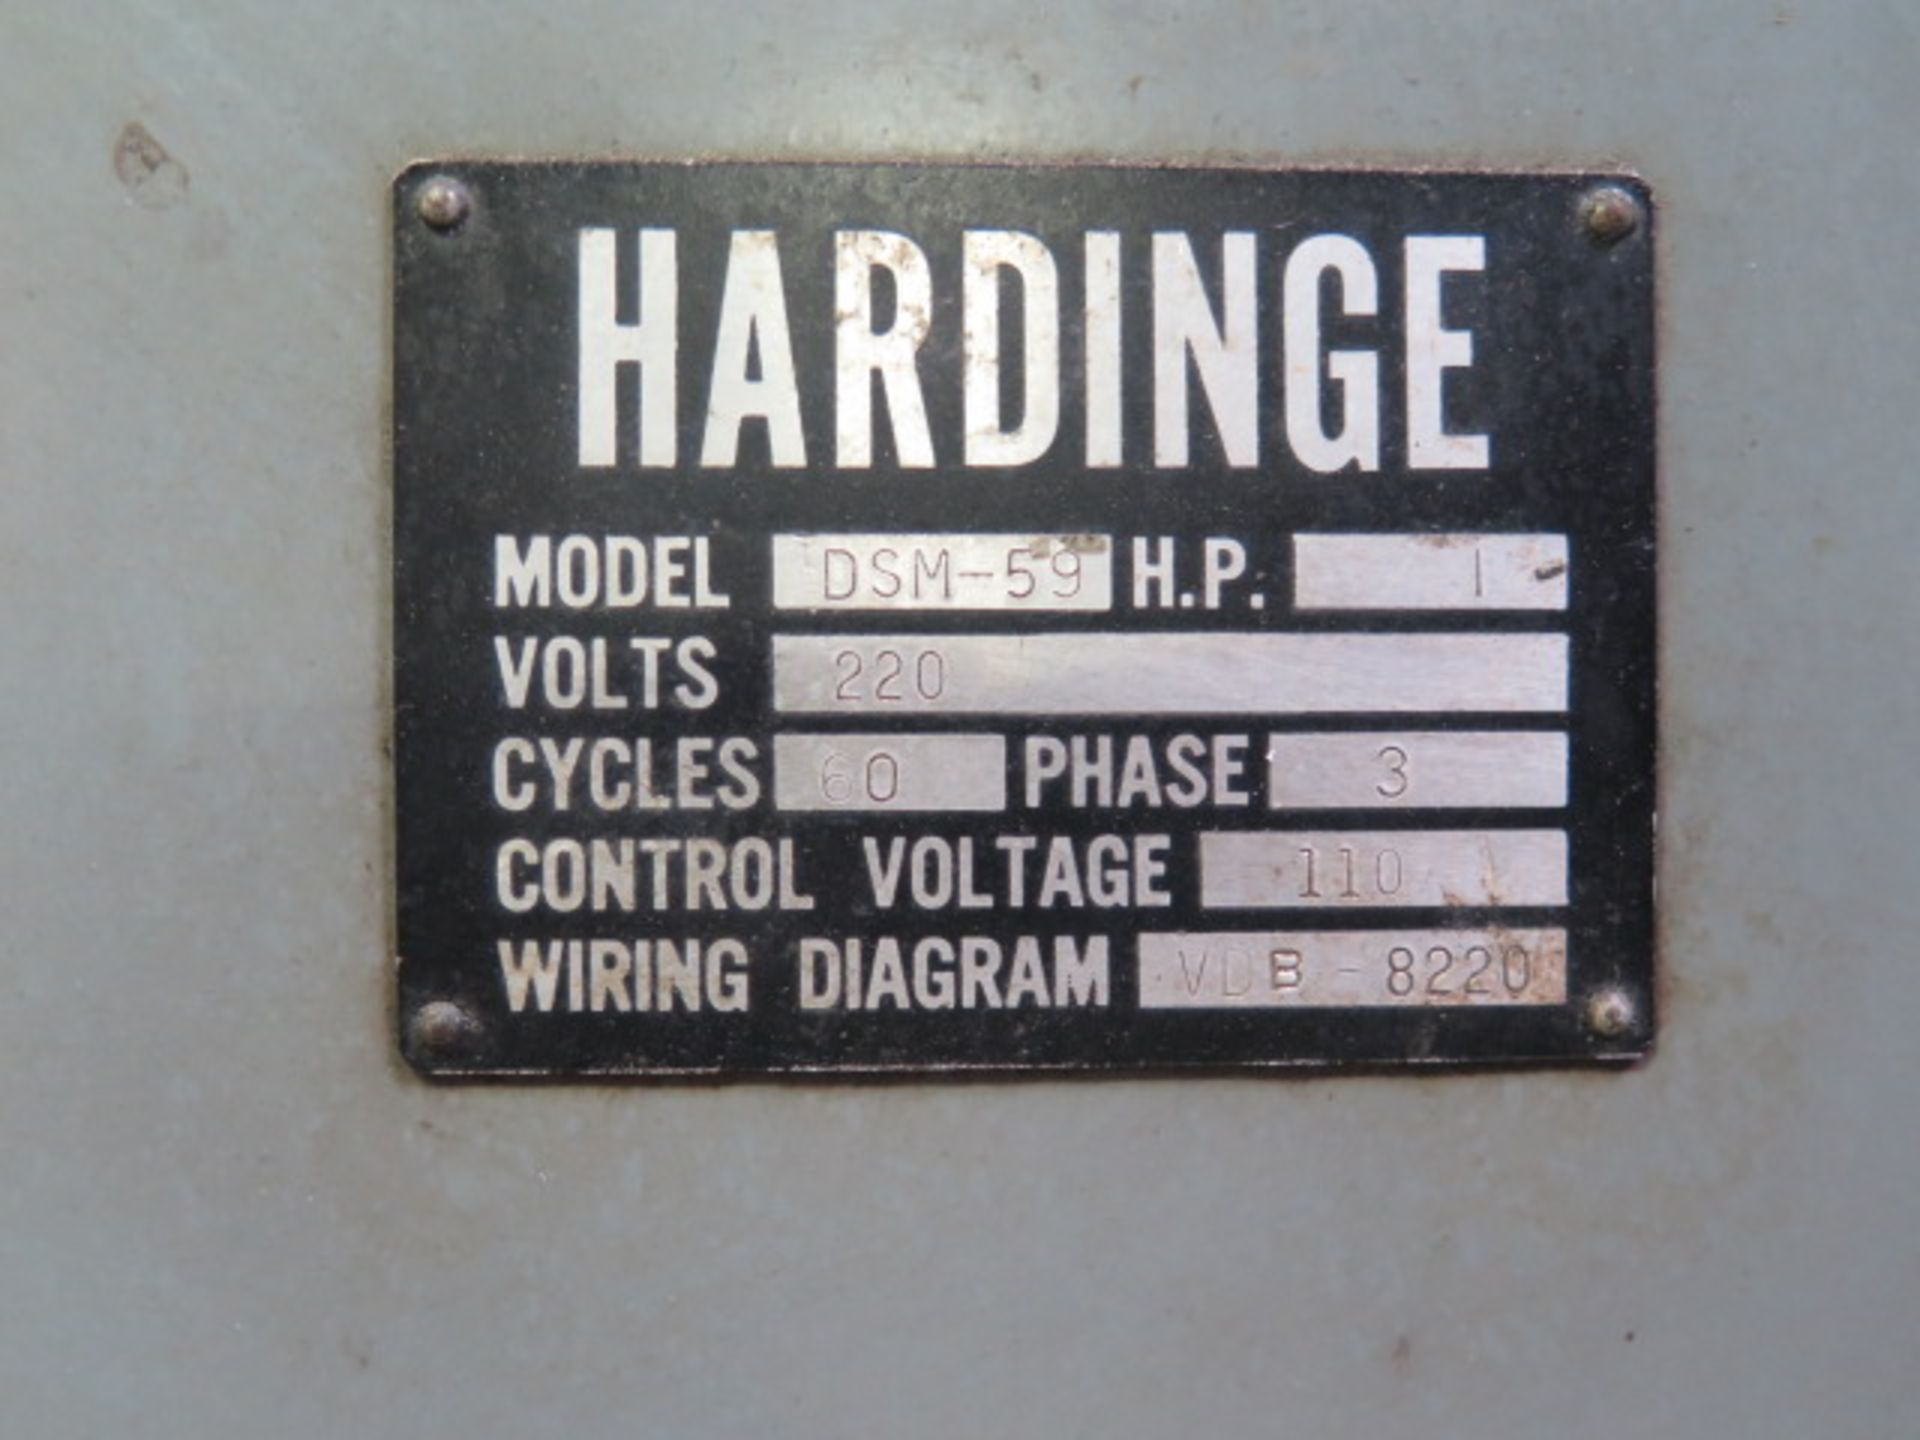 Hardinge DSM-59 Narrow Bed Second OP Lathe s/n DV-59-12670 w/ 230-3500 RPM, SOLD AS IS - Image 9 of 9